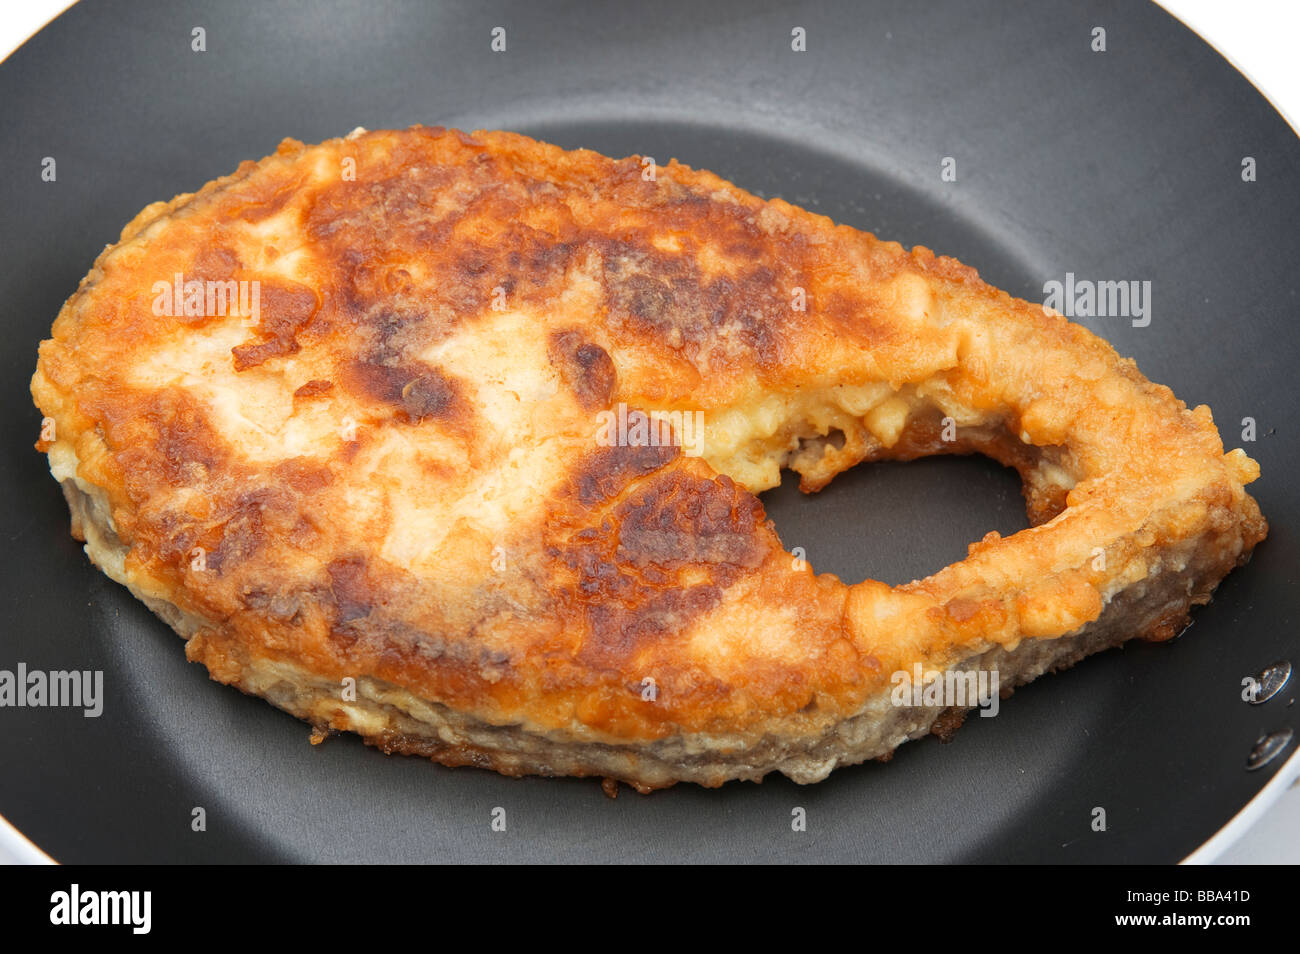 Objeto en blanco filete de pescado frito de alimentos Foto de stock